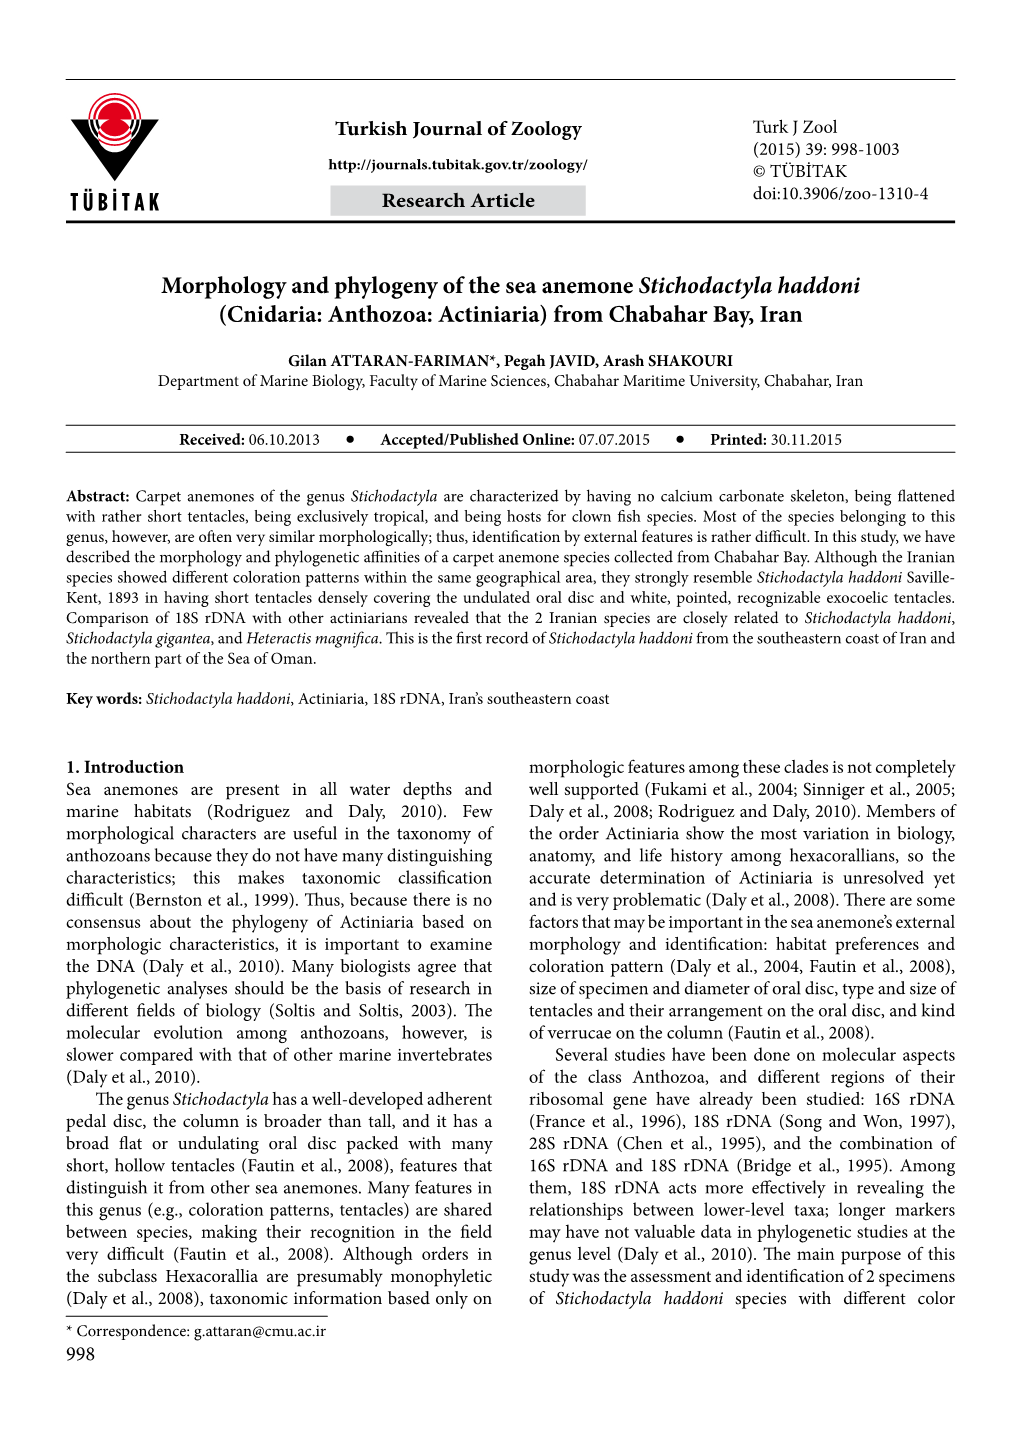 Morphology and Phylogeny of the Sea Anemone Stichodactyla Haddoni (Cnidaria: Anthozoa: Actiniaria) from Chabahar Bay, Iran